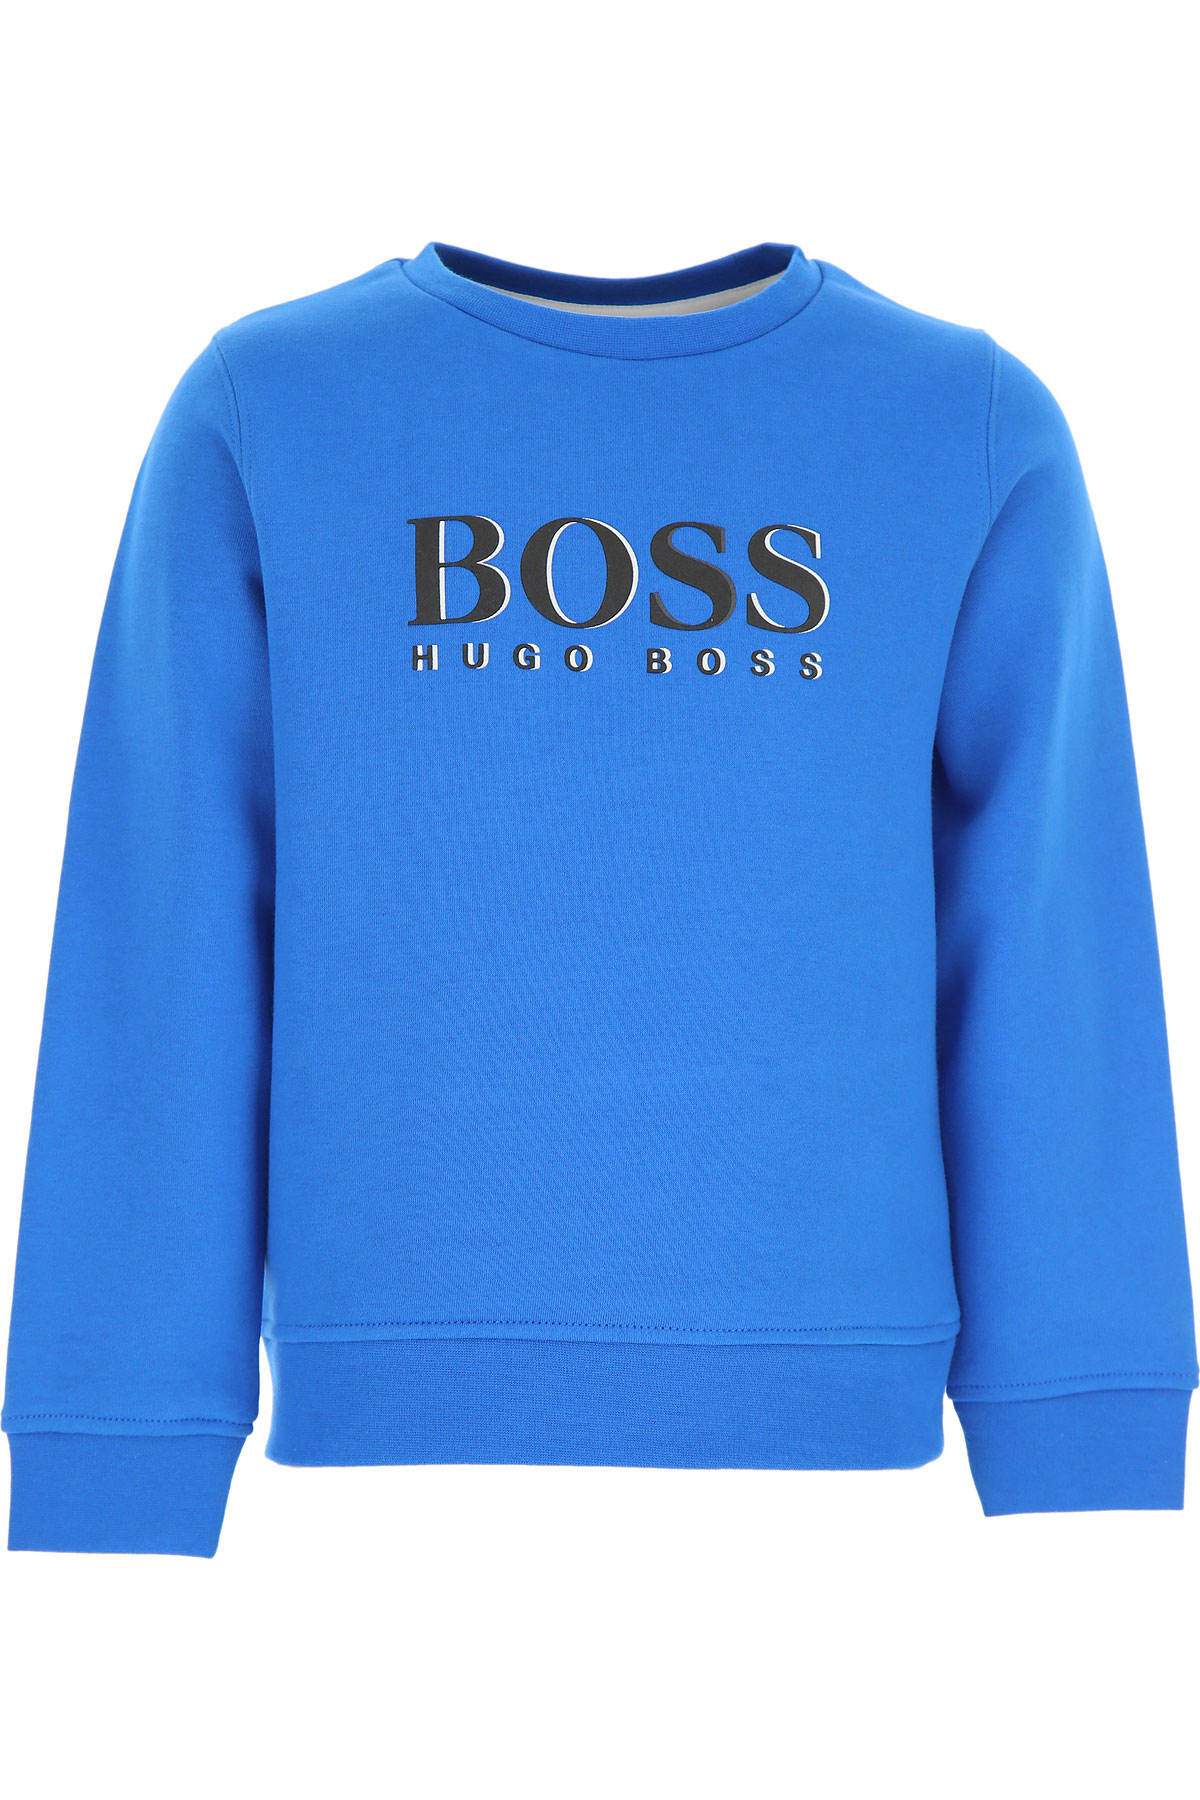 Hugo Boss Kinder Sweatshirt & Kapuzenpullover für Jungen Günstig im Sale, Blau, Baumwolle, 2017, 10Y 12Y 16Y 4Y 5Y 6Y 8Y